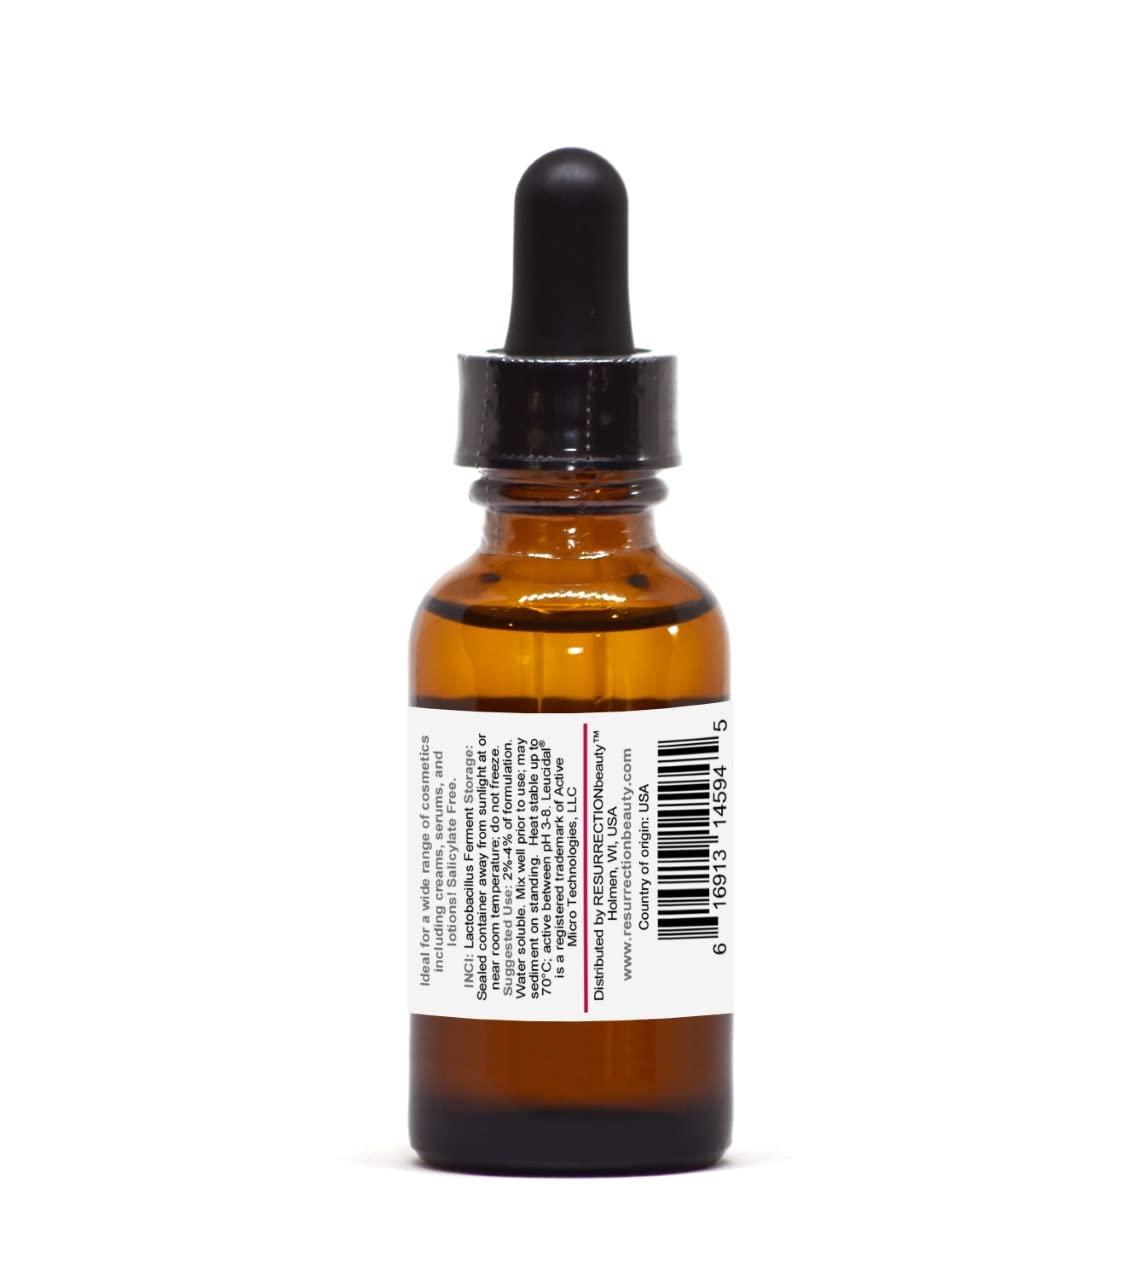 Leucidal Liquid SF, Natural Moisturizing Ingredient for DIY Vitamin C  Ascorbic Acid & Hyaluronic Acid Powder Serum Facial Lotion & Other Cosmetic  Making Formulations 1 oz